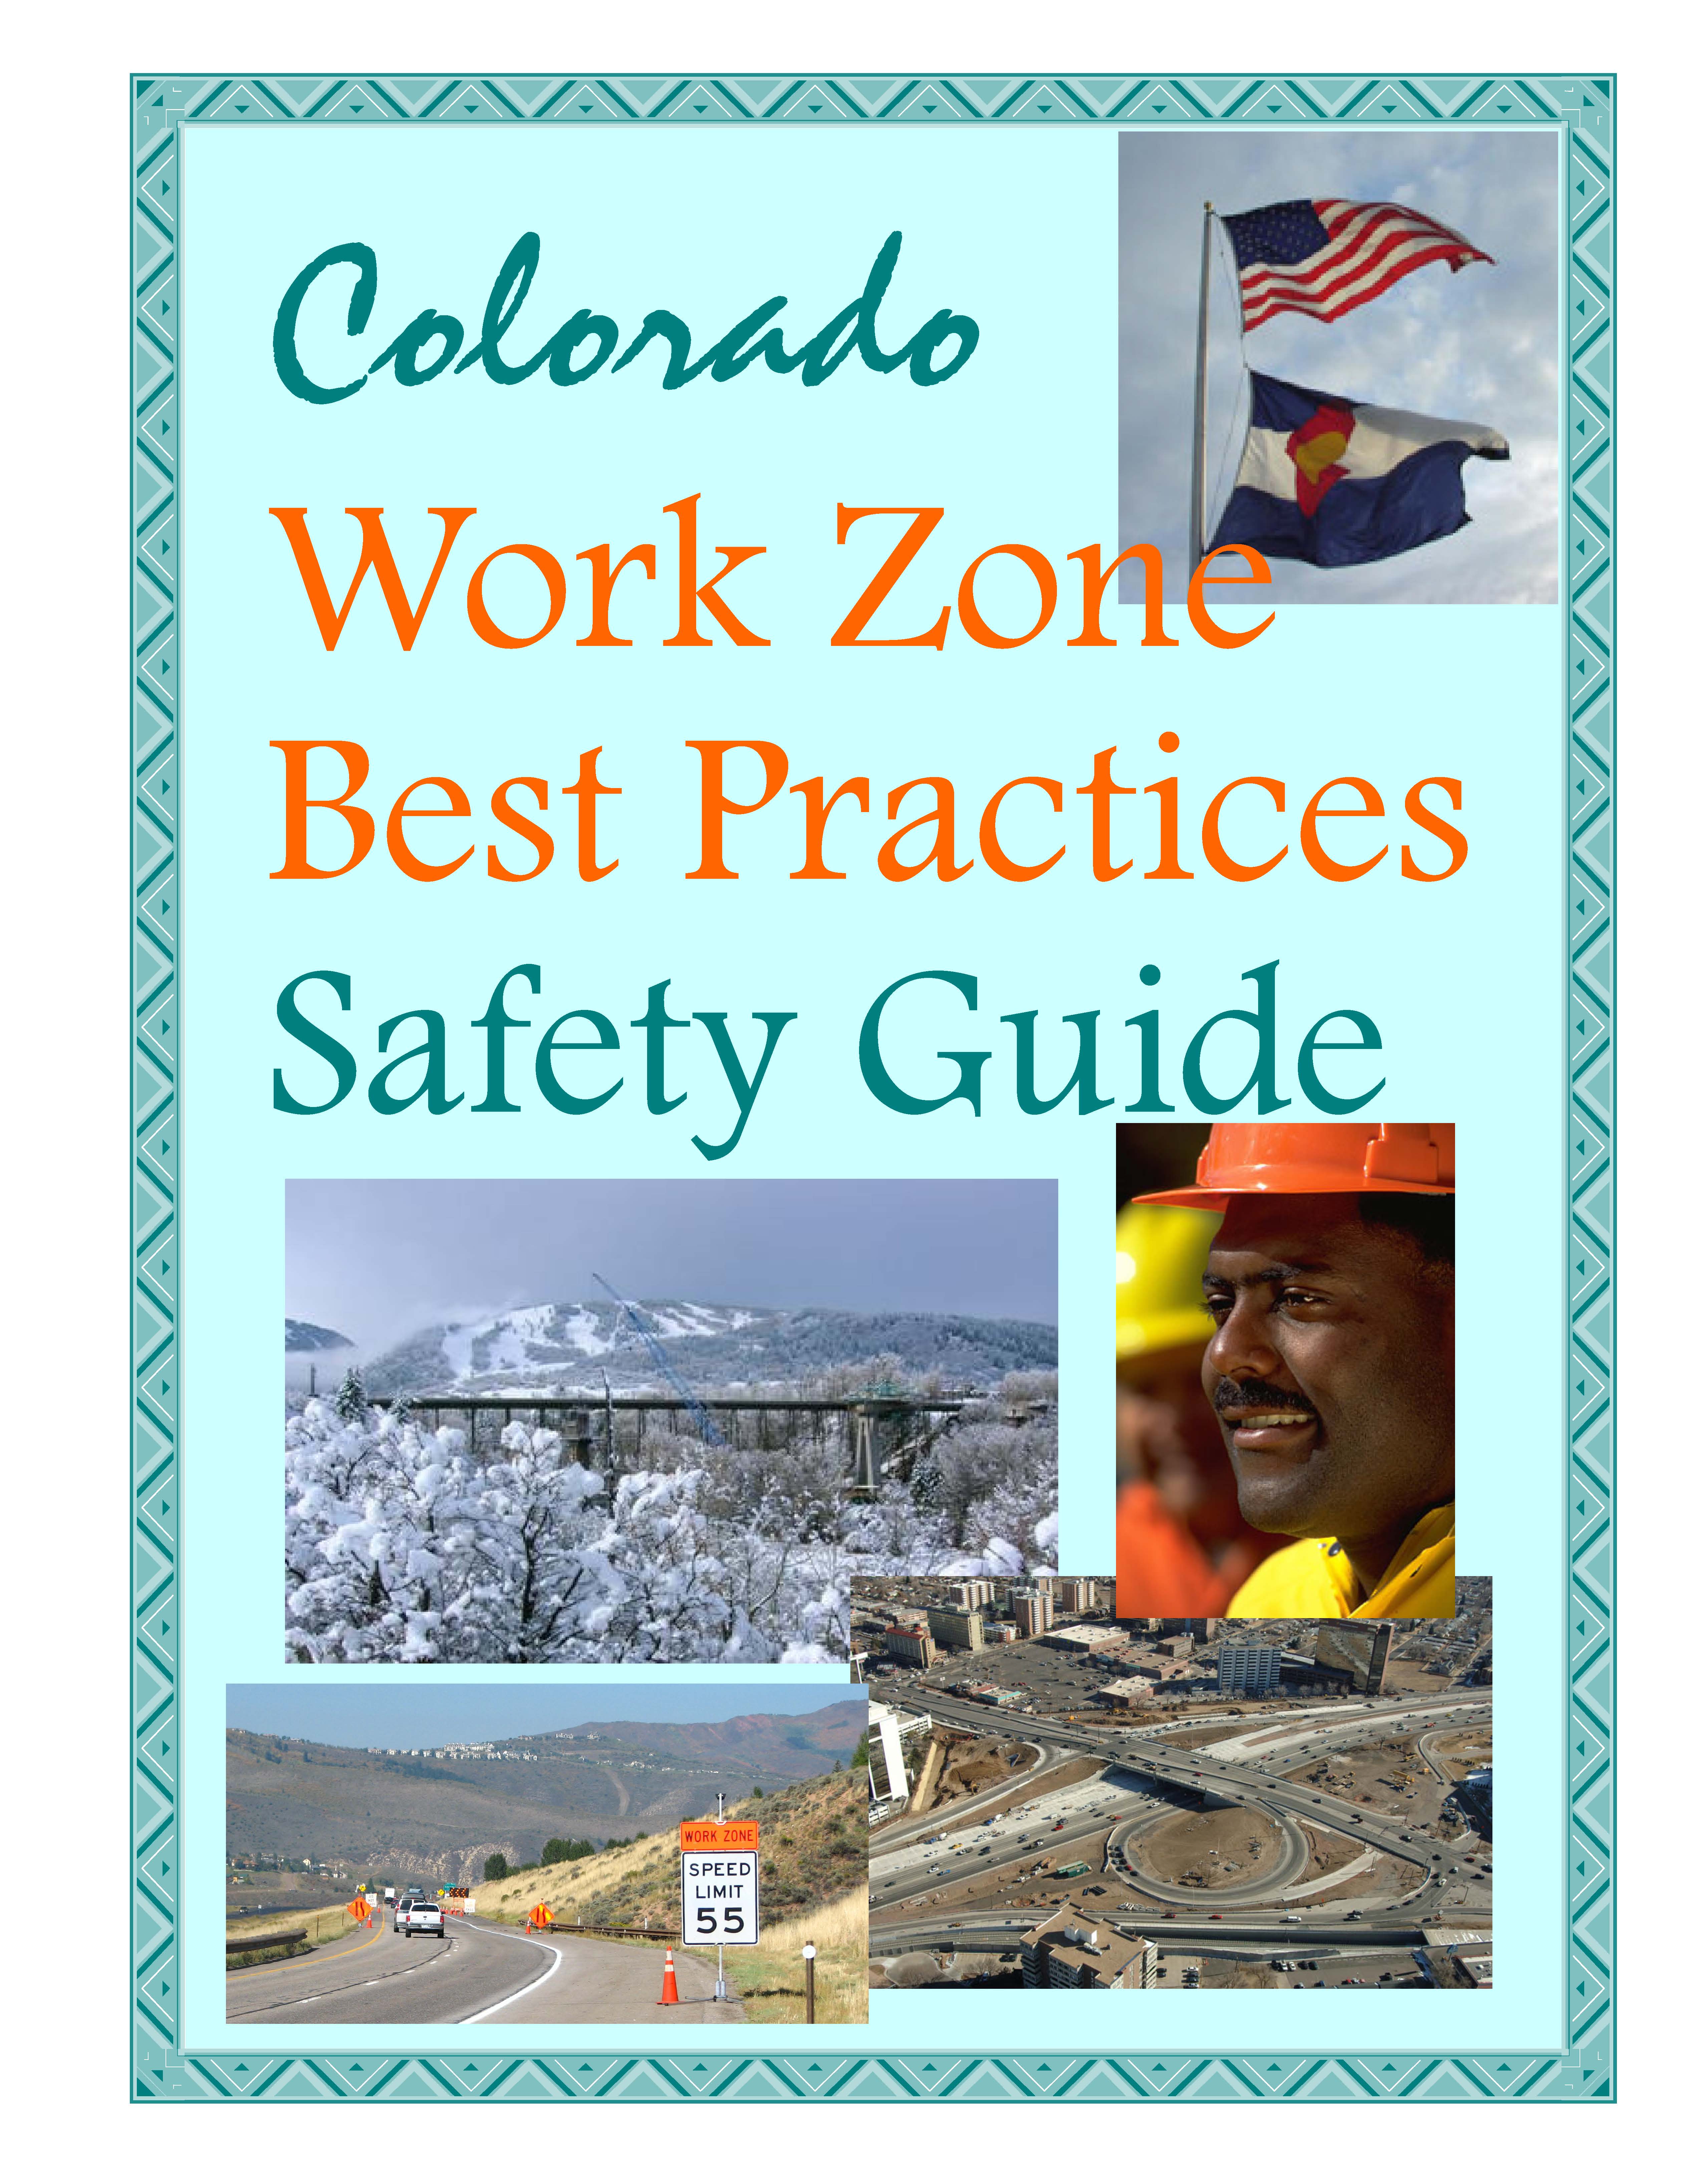 Work Zone Best Practices detail image